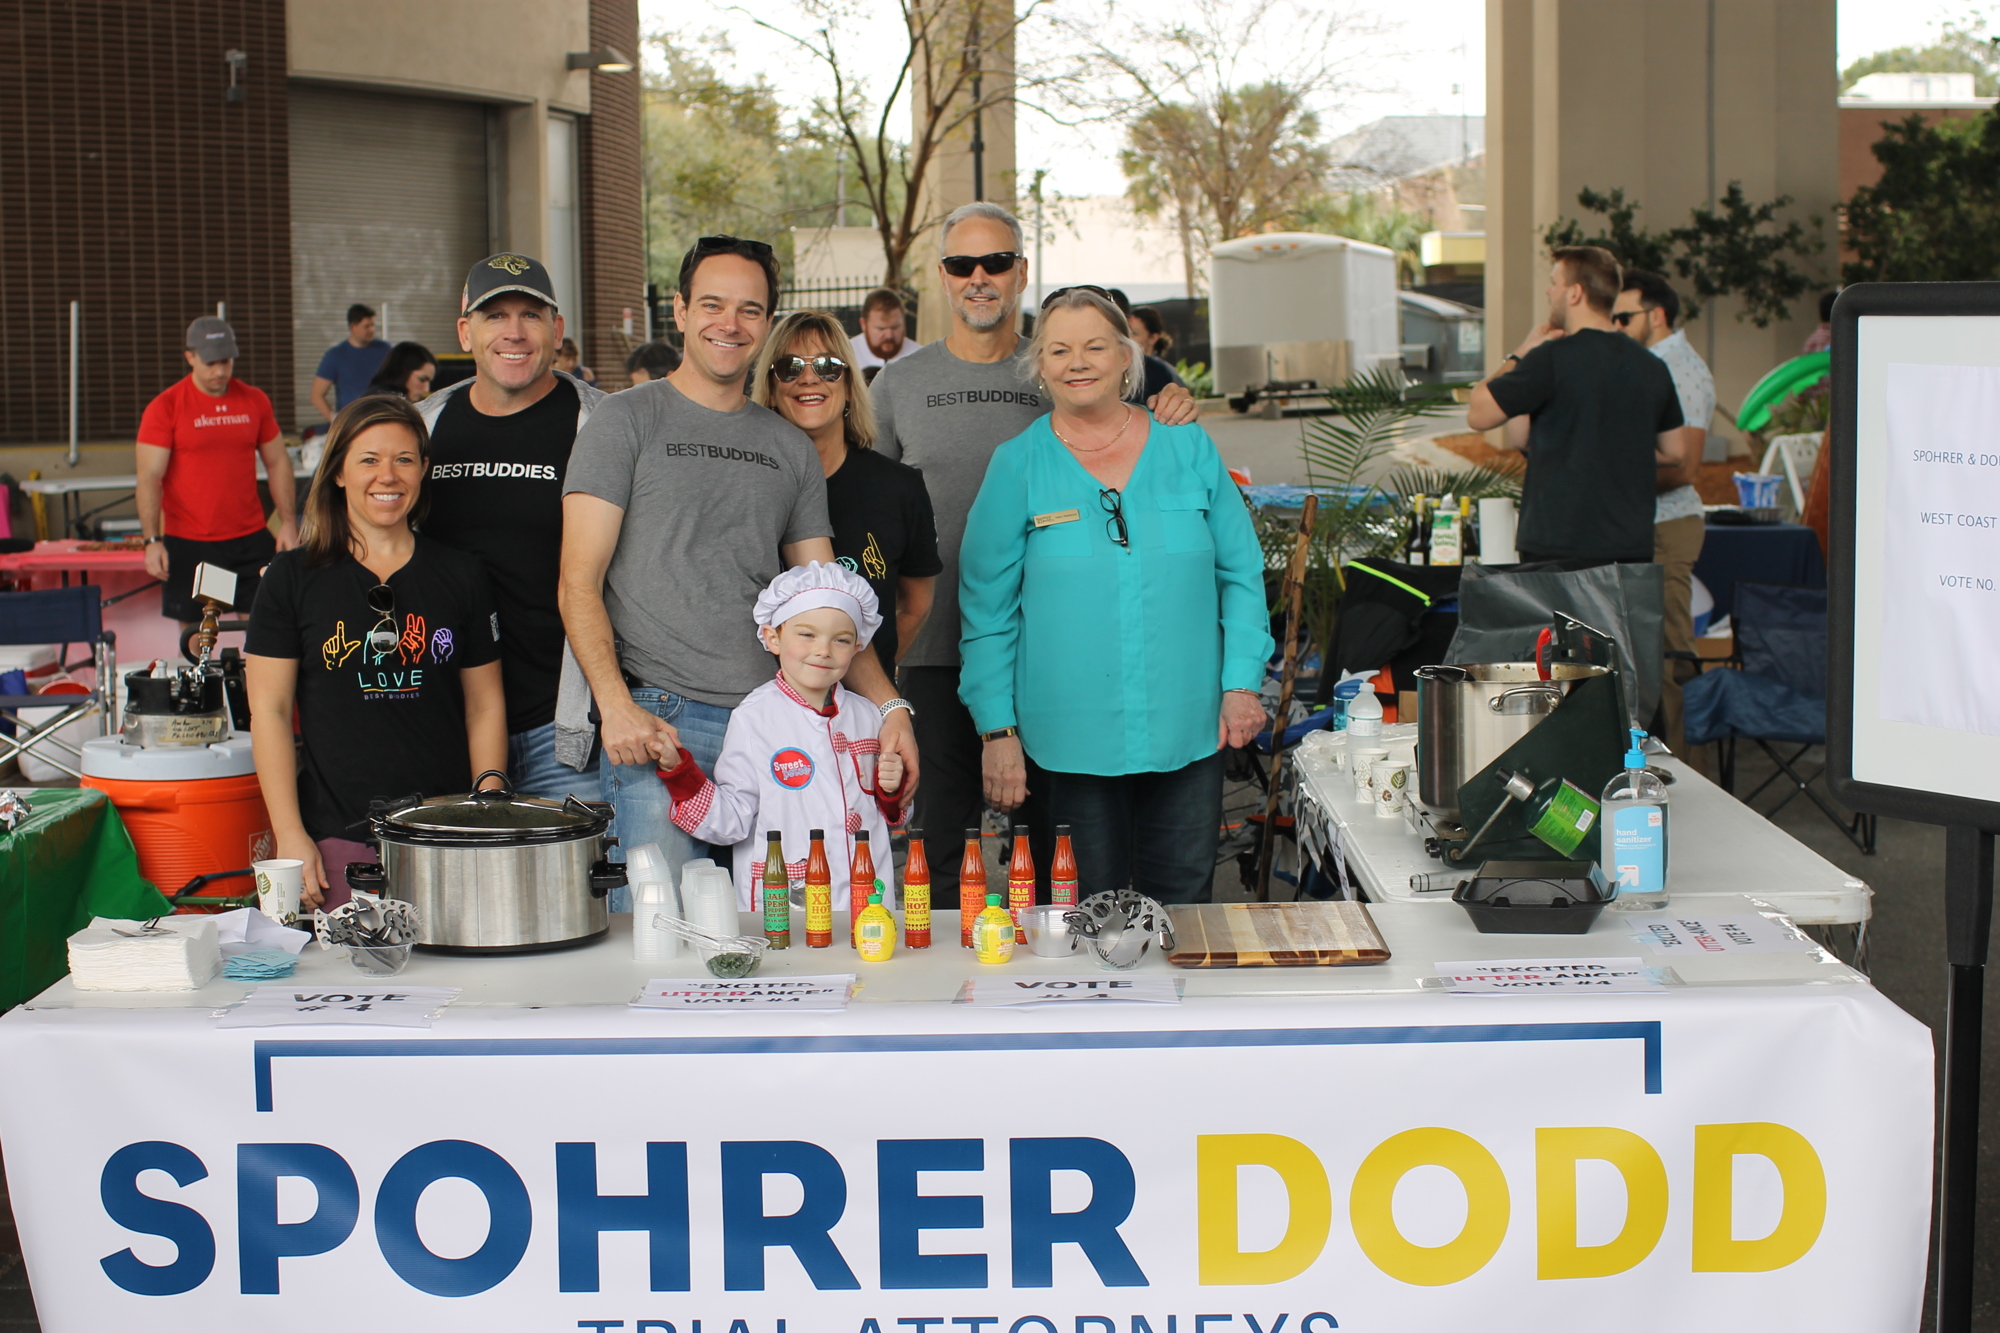 The Spohrer Dodd team was the “Crowd Favorite” award winner. From left, Sarah Shedlarski; Keith Maynard; Jay Howanitz and his son, Dutch; Nancy O’Grady; Steve Browning; and Helen Westbrook.